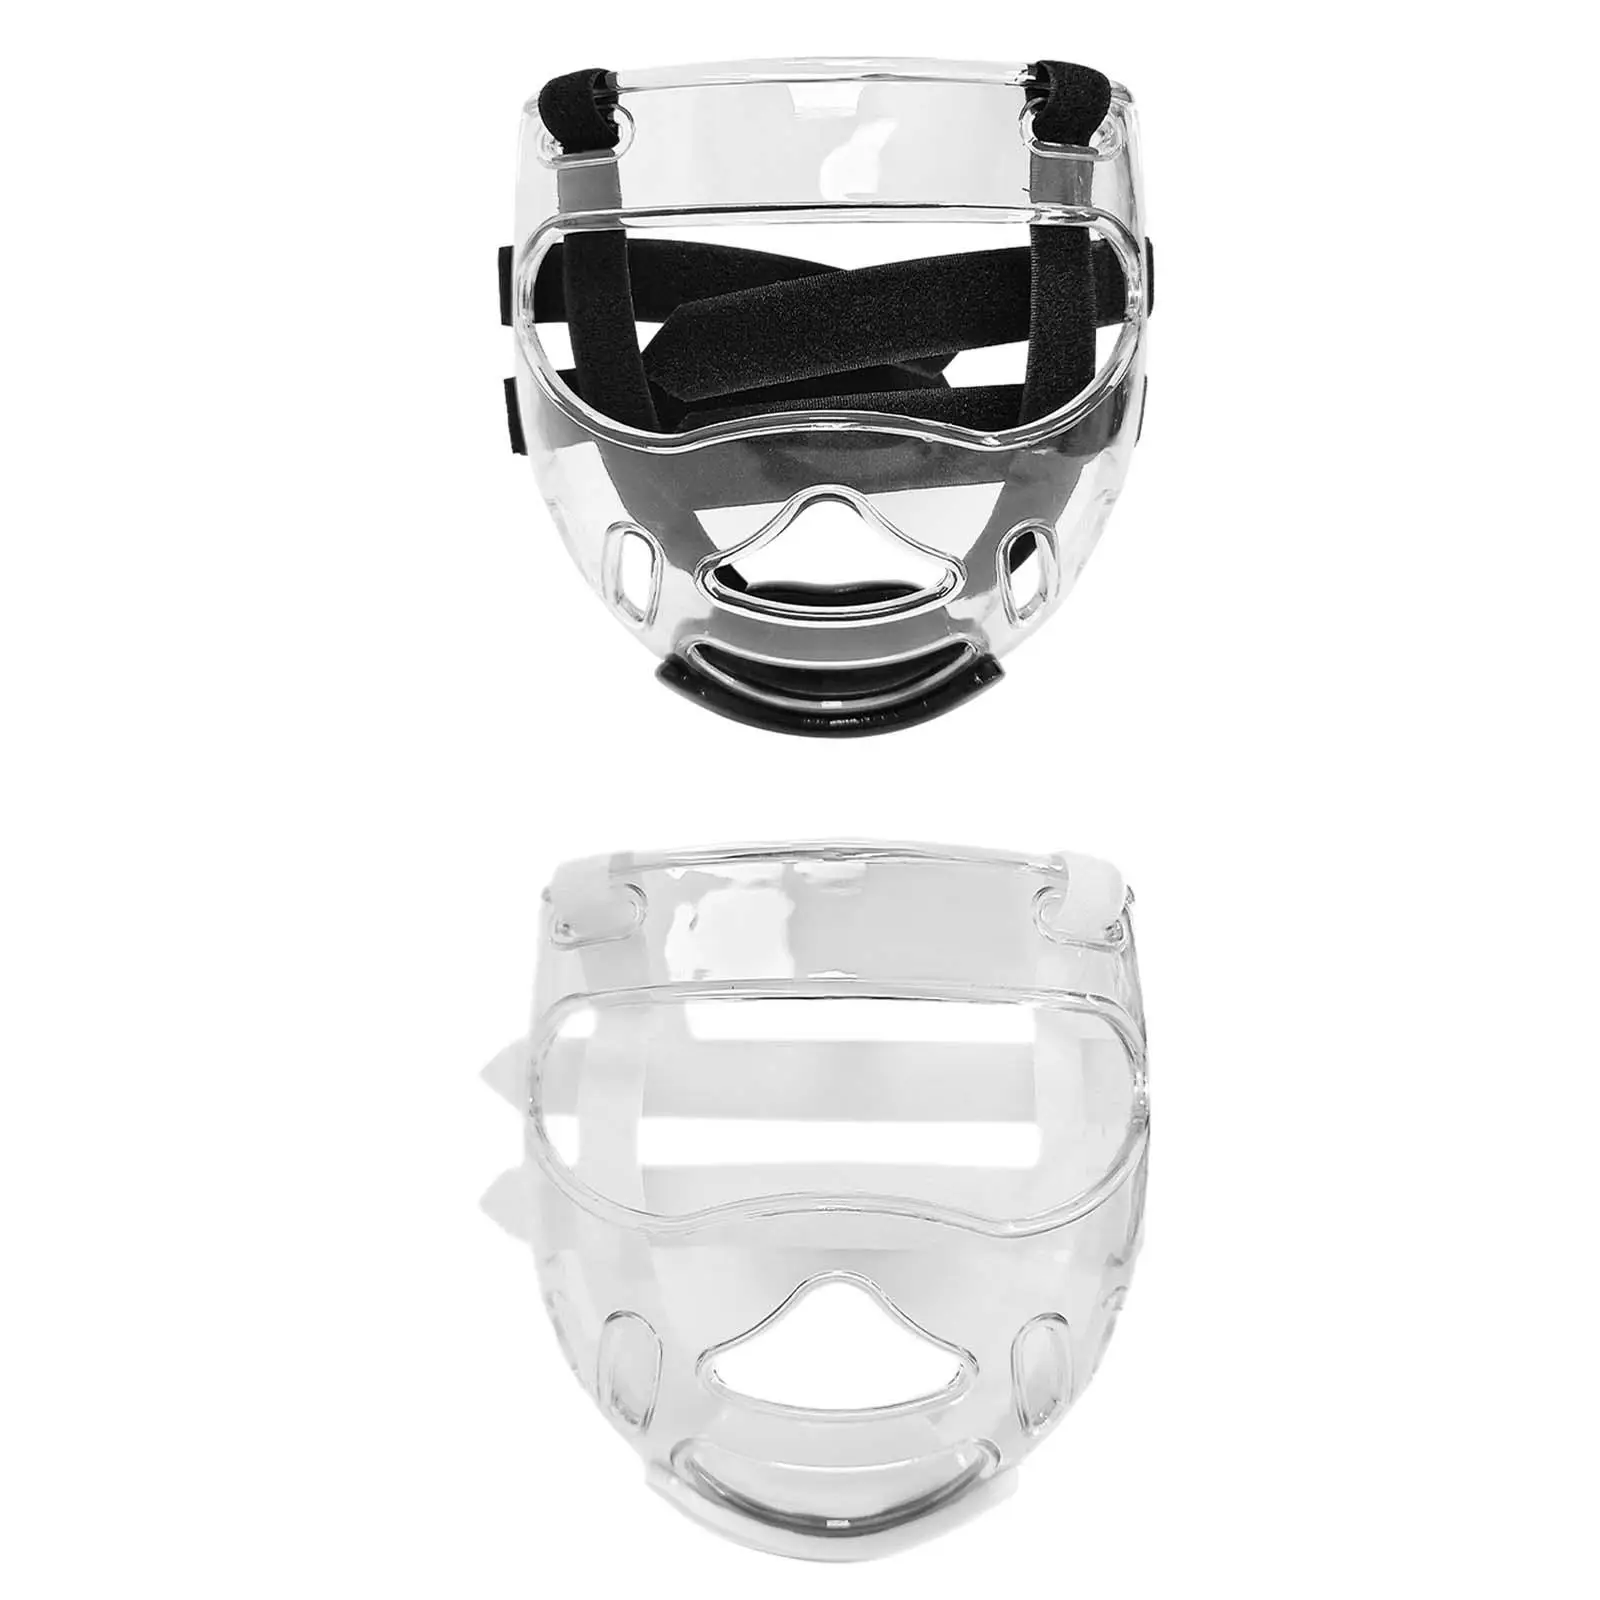 Taekwondo Mask Taekwondo Face Shield Adults Children Face Protection Cover for Boxin Sanda Grappling Sparring Training Equipment